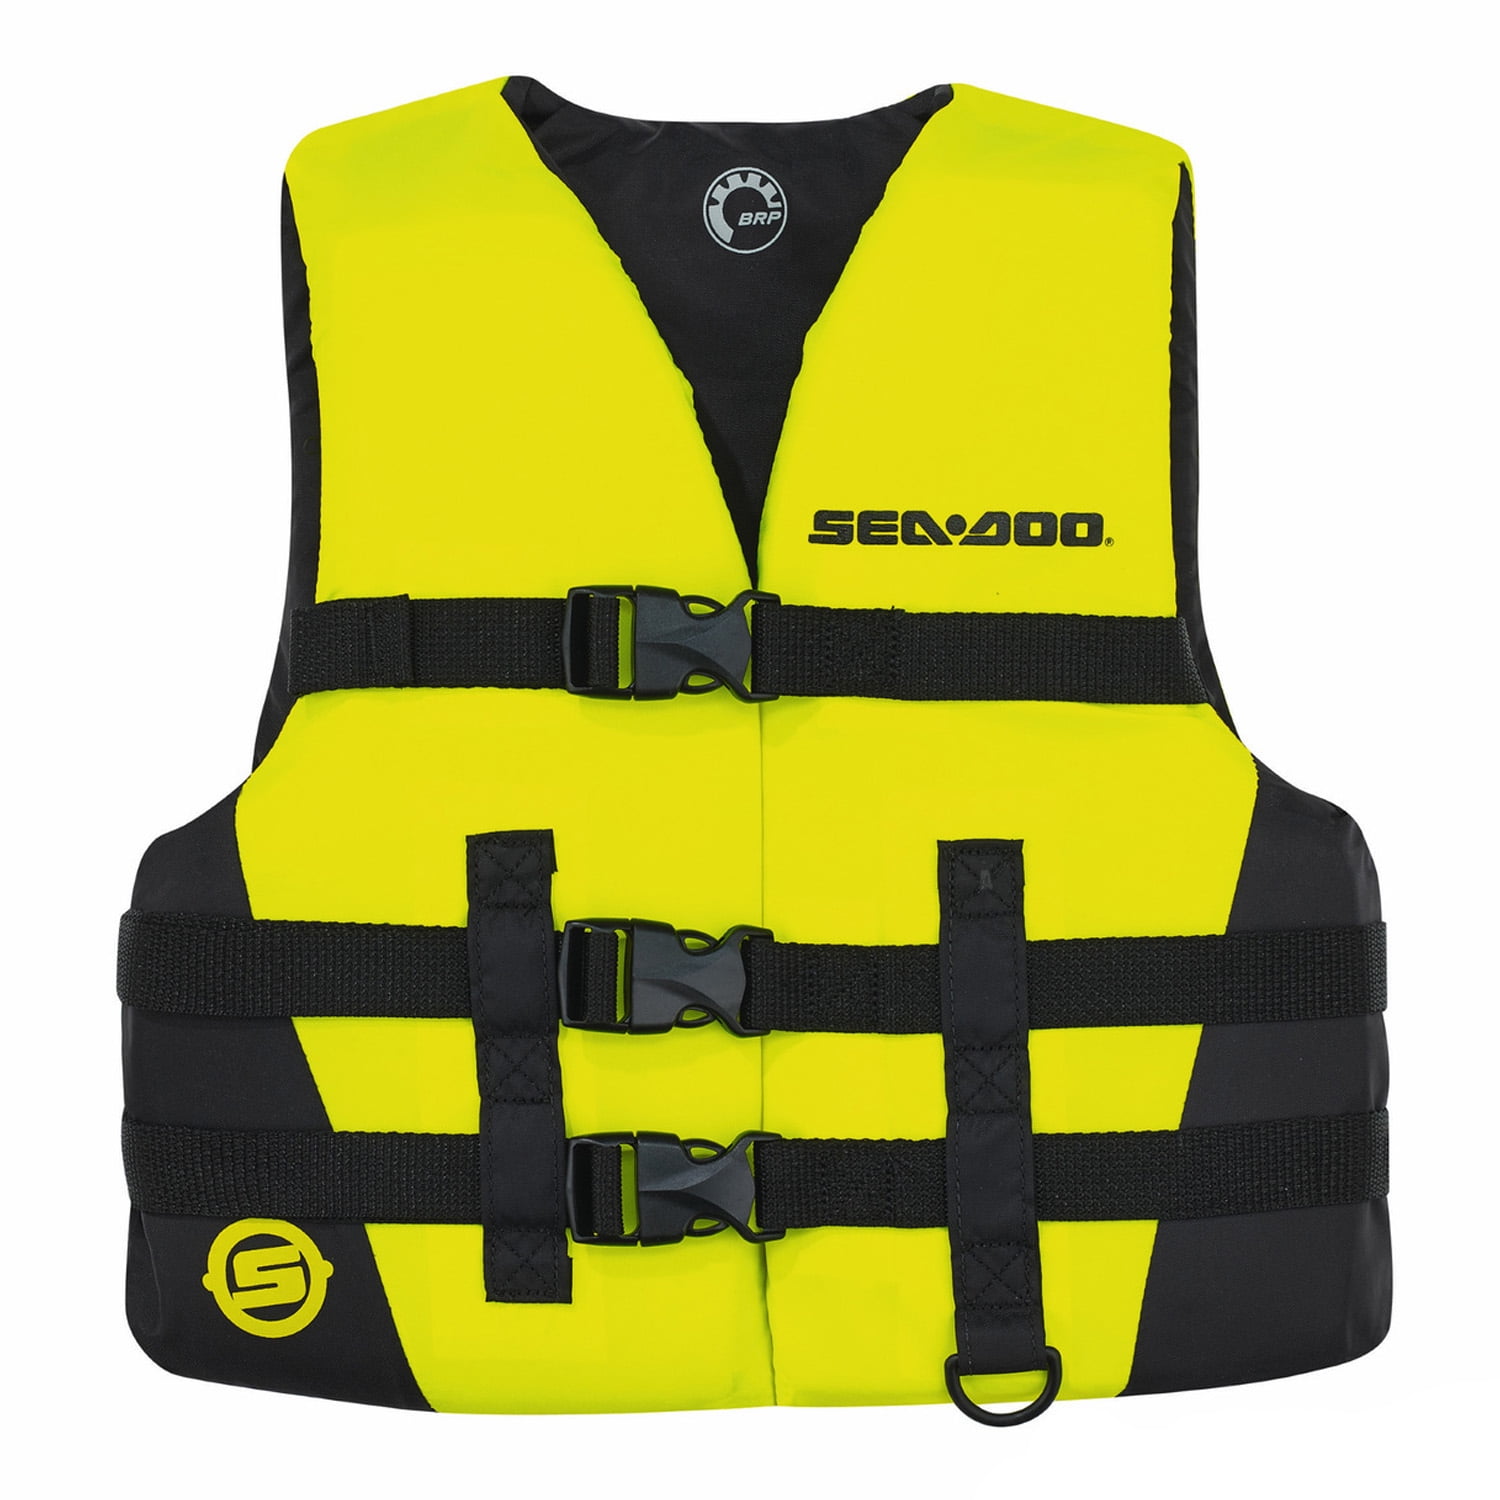 Sea Doo Kids Sandsea PFD Life Jacket Safety Swimming Seadoo Vest Child Infant 